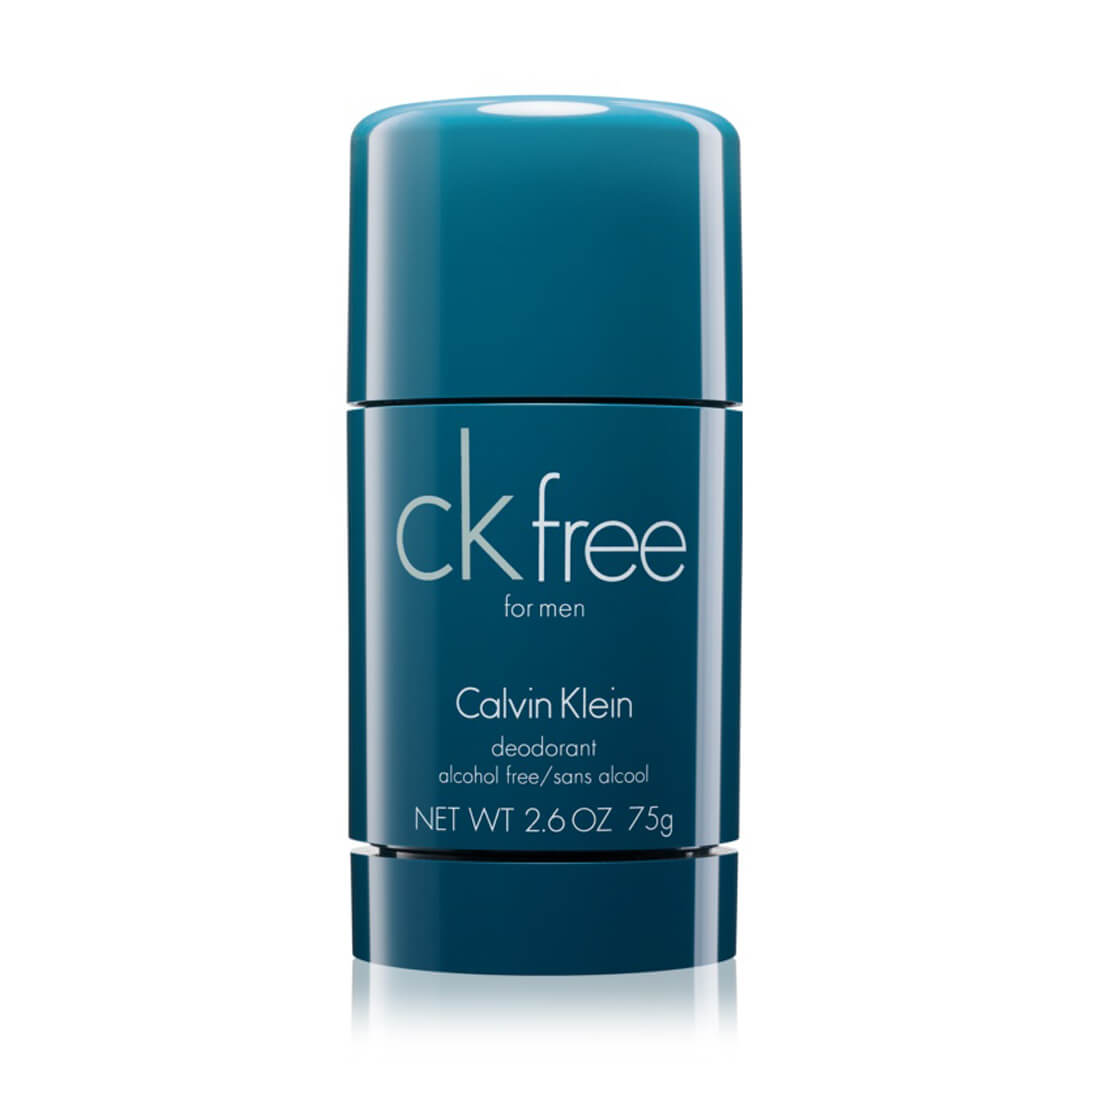 Calvin Klein CK Free Deodorant Stick For Men - 75g